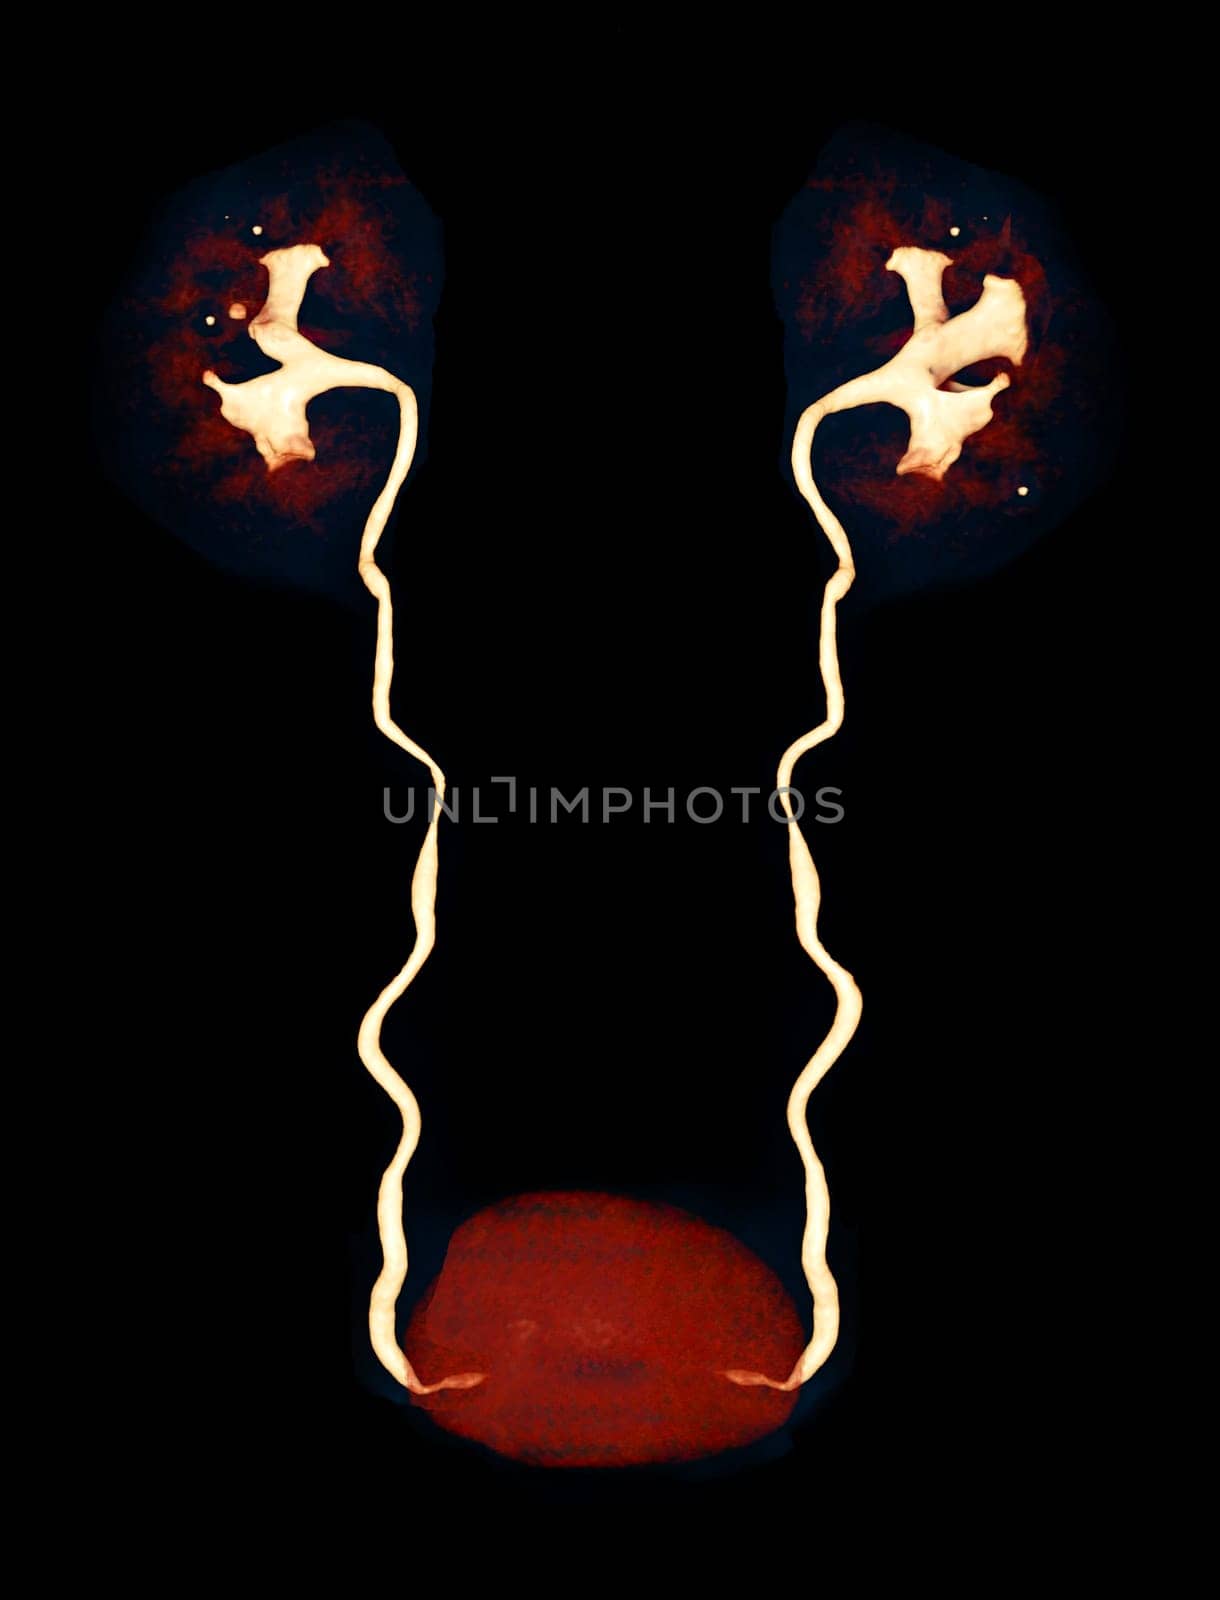 CTA Renal artery  3D rendering image  showing both kidney, Ureter and bladder . by samunella